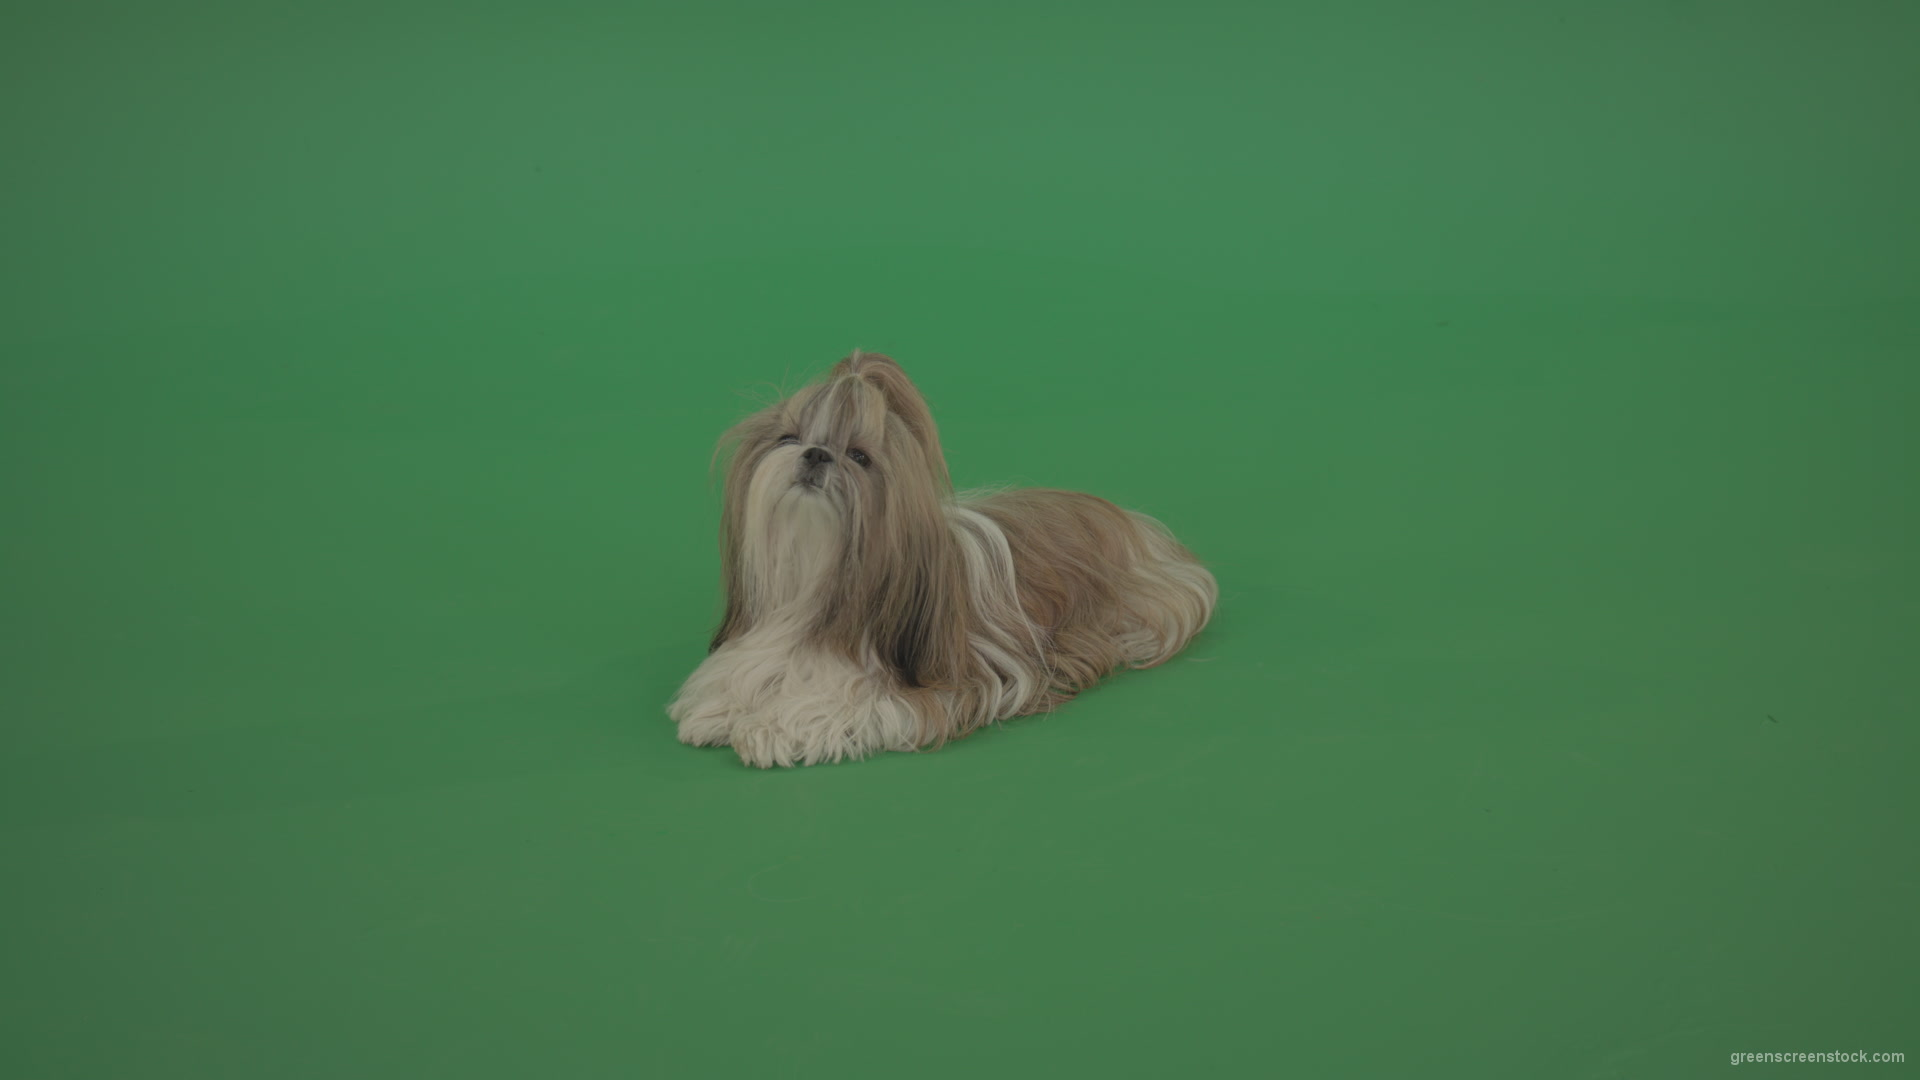 Green-Screen-Animal-Shihtzu-dog-pet-pedigree-with-long-hair-sitting-isolated-on-green-screen_007 Green Screen Stock